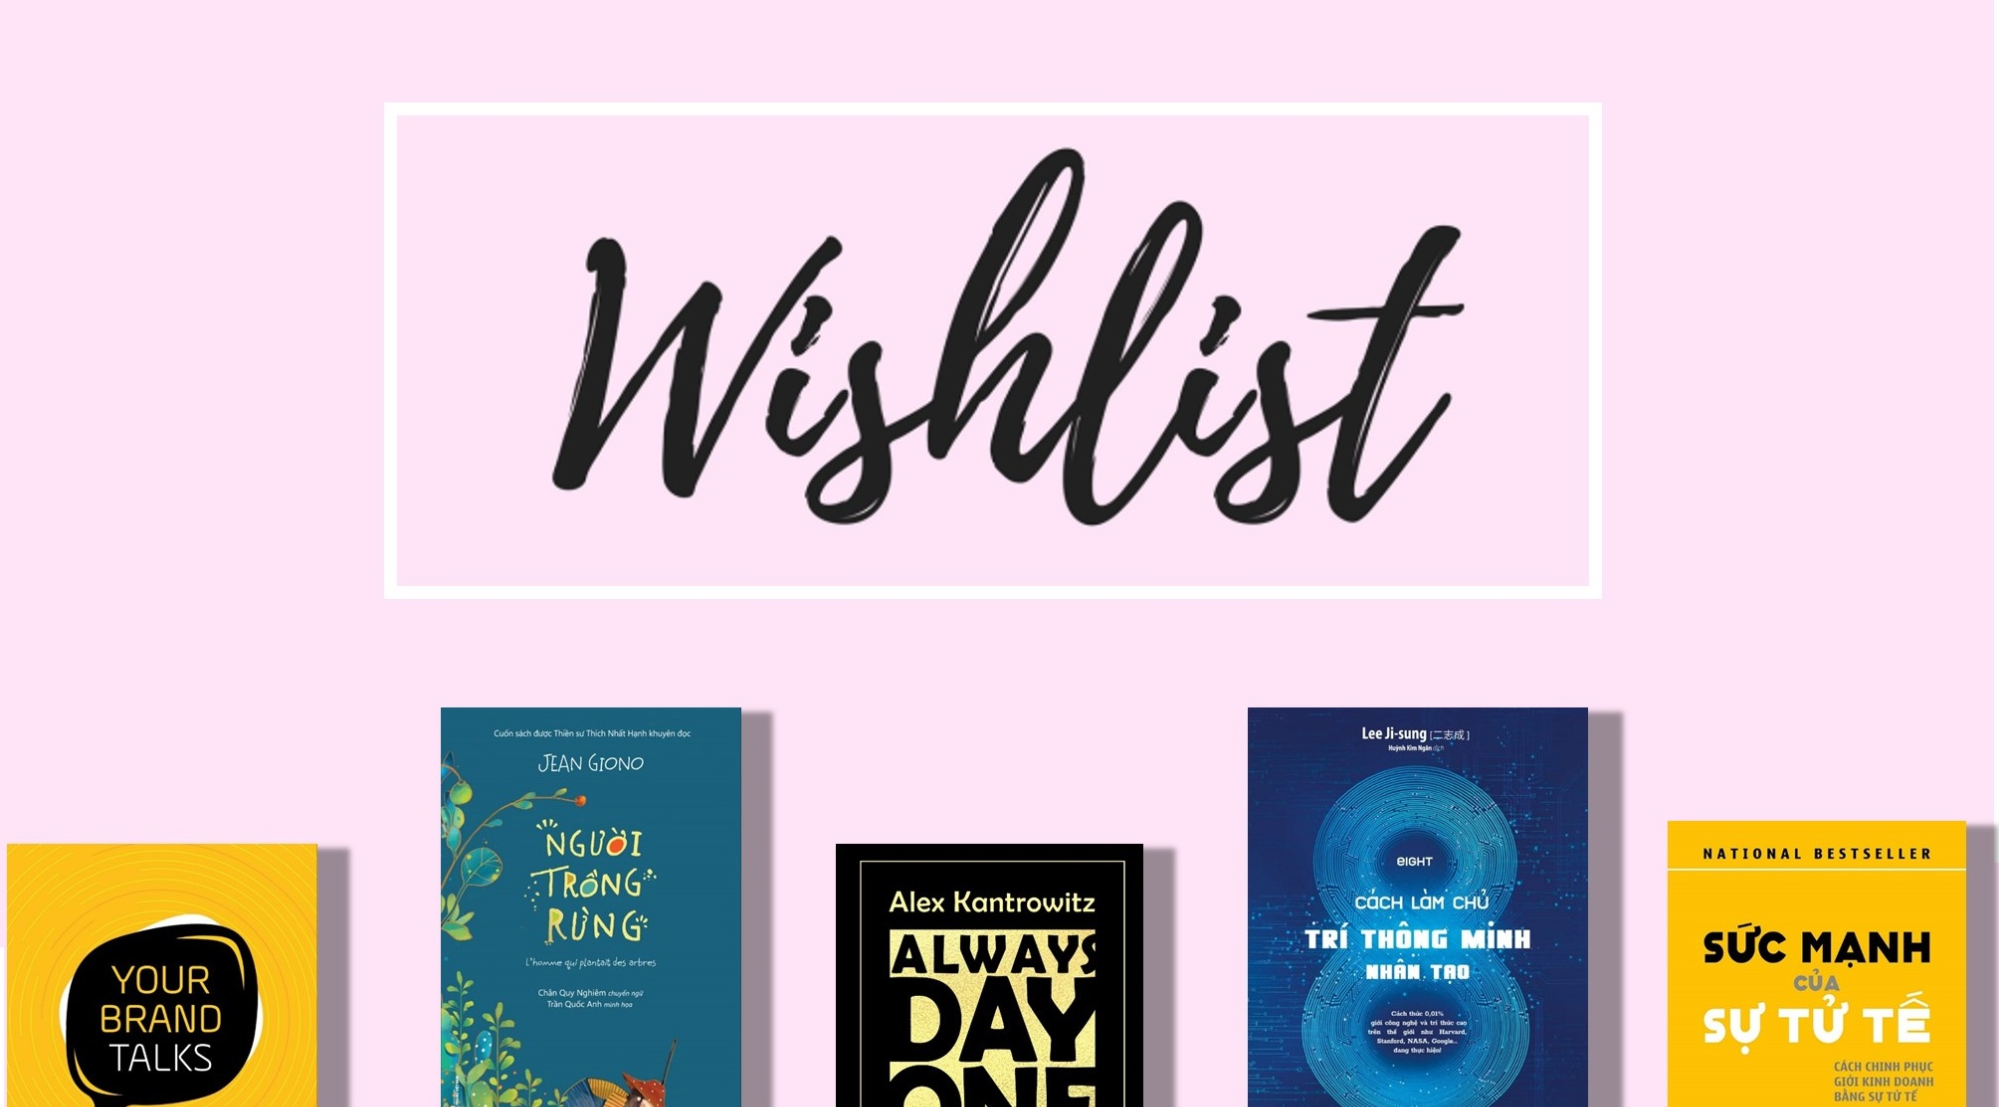 wish-list